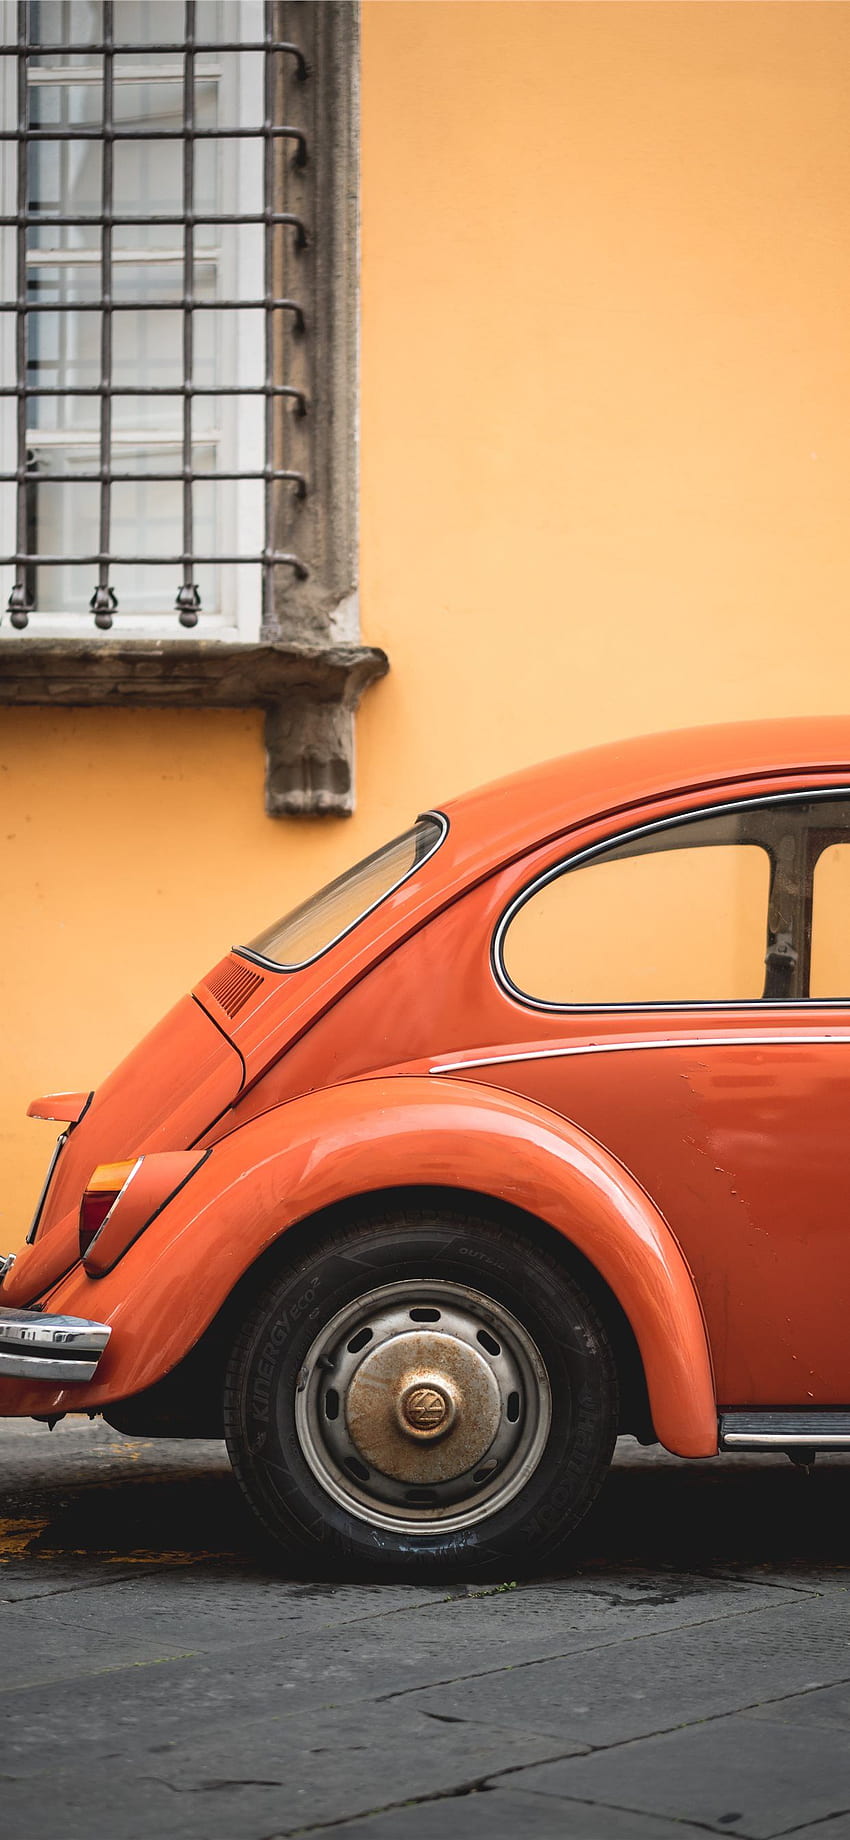 fokus dangkal Volkswagen Beetle oranye iPhone X, VW wallpaper ponsel HD